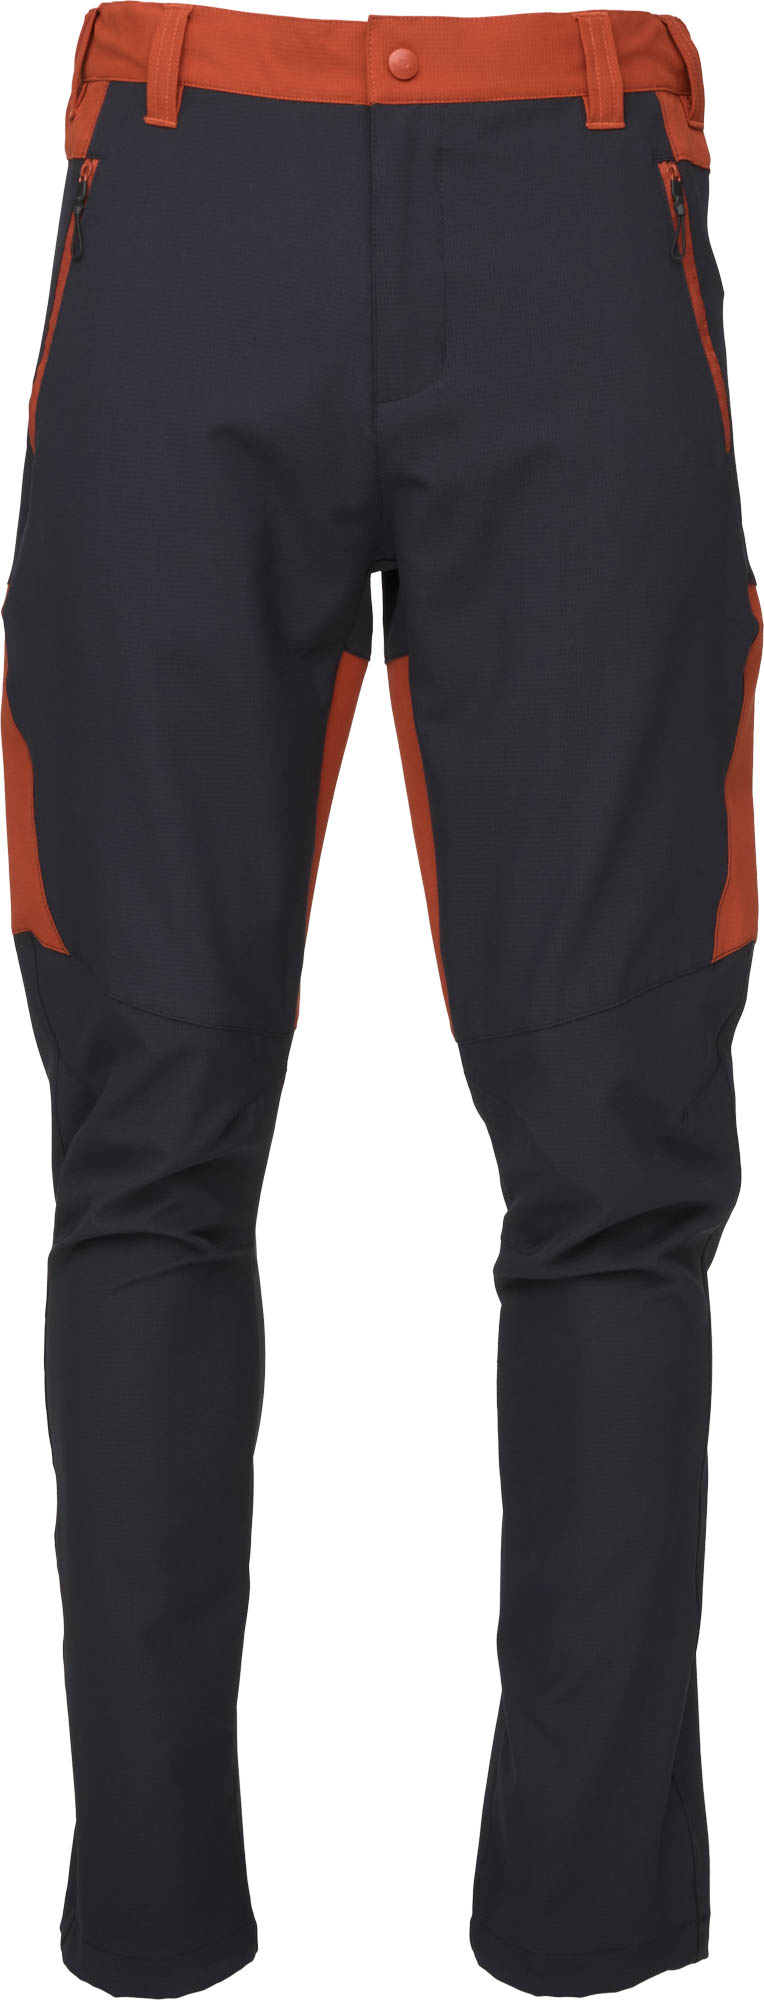 Men's trousers LOAP UZMUL Orange/Dark blue